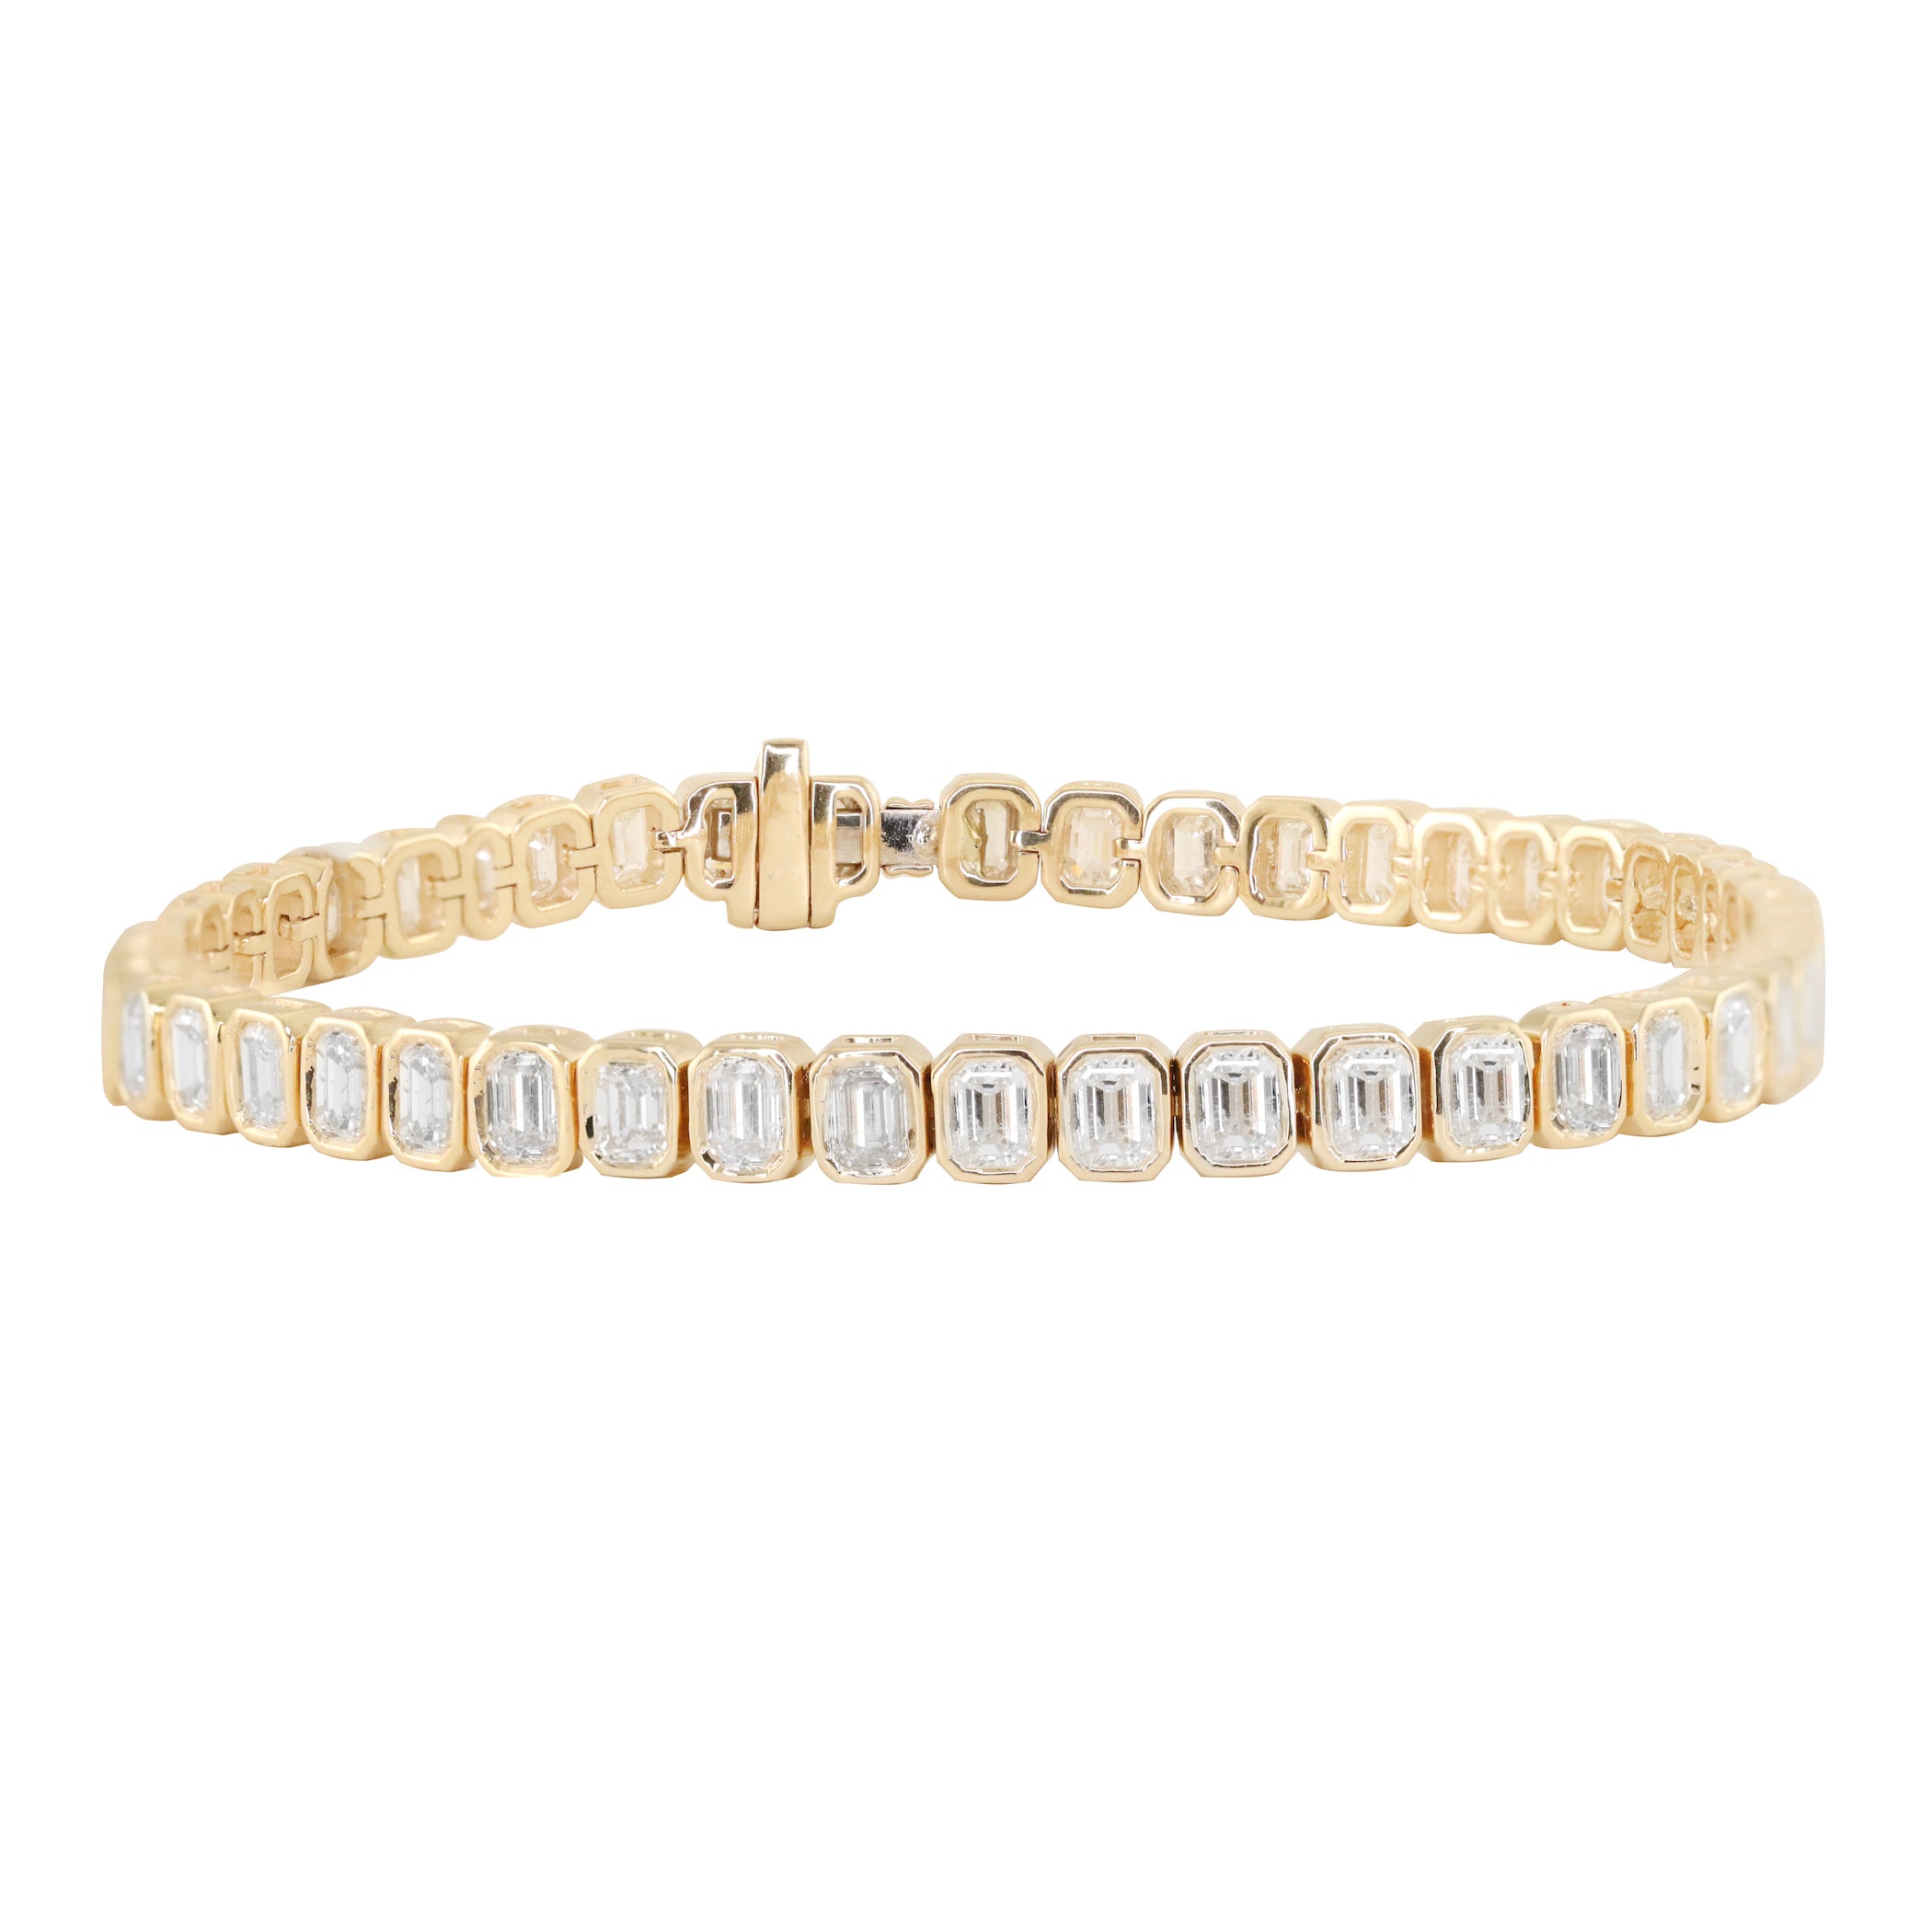 14k white gold 7 CT diamond bracelet tennis 7.5” long round cut - Jewelry